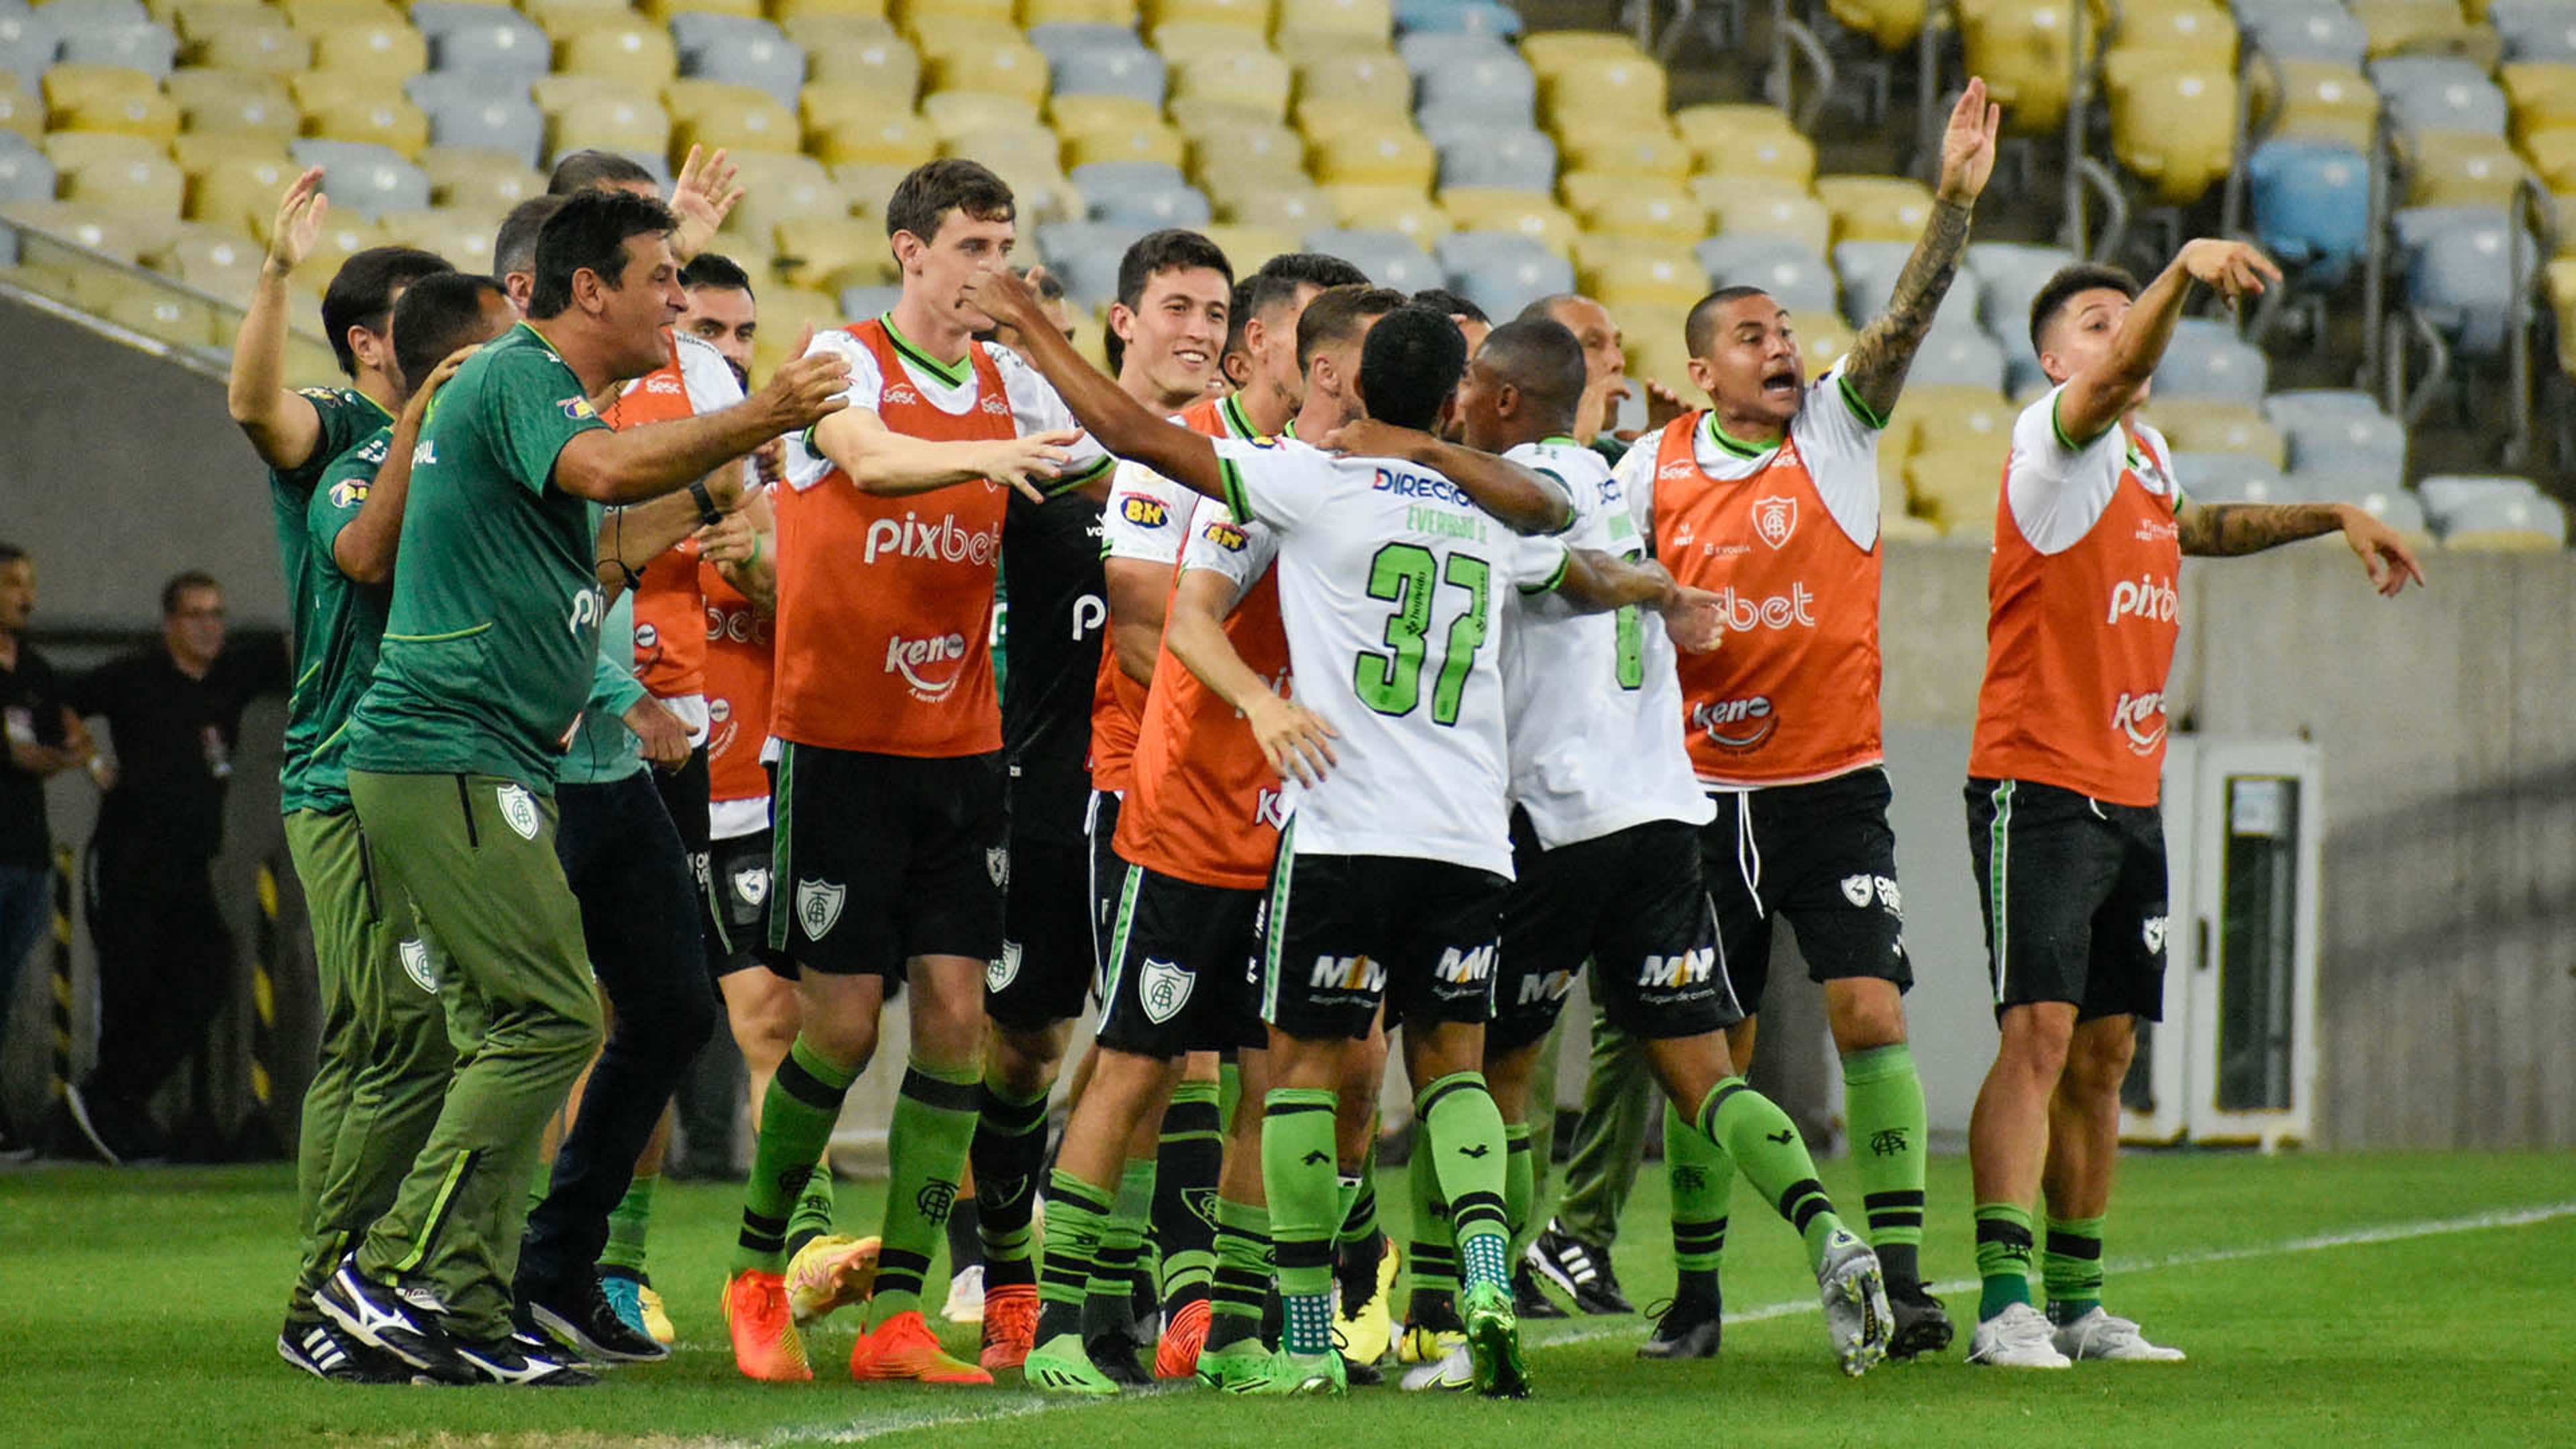 Tombense and Vila Nova: A Clash of Football Titans